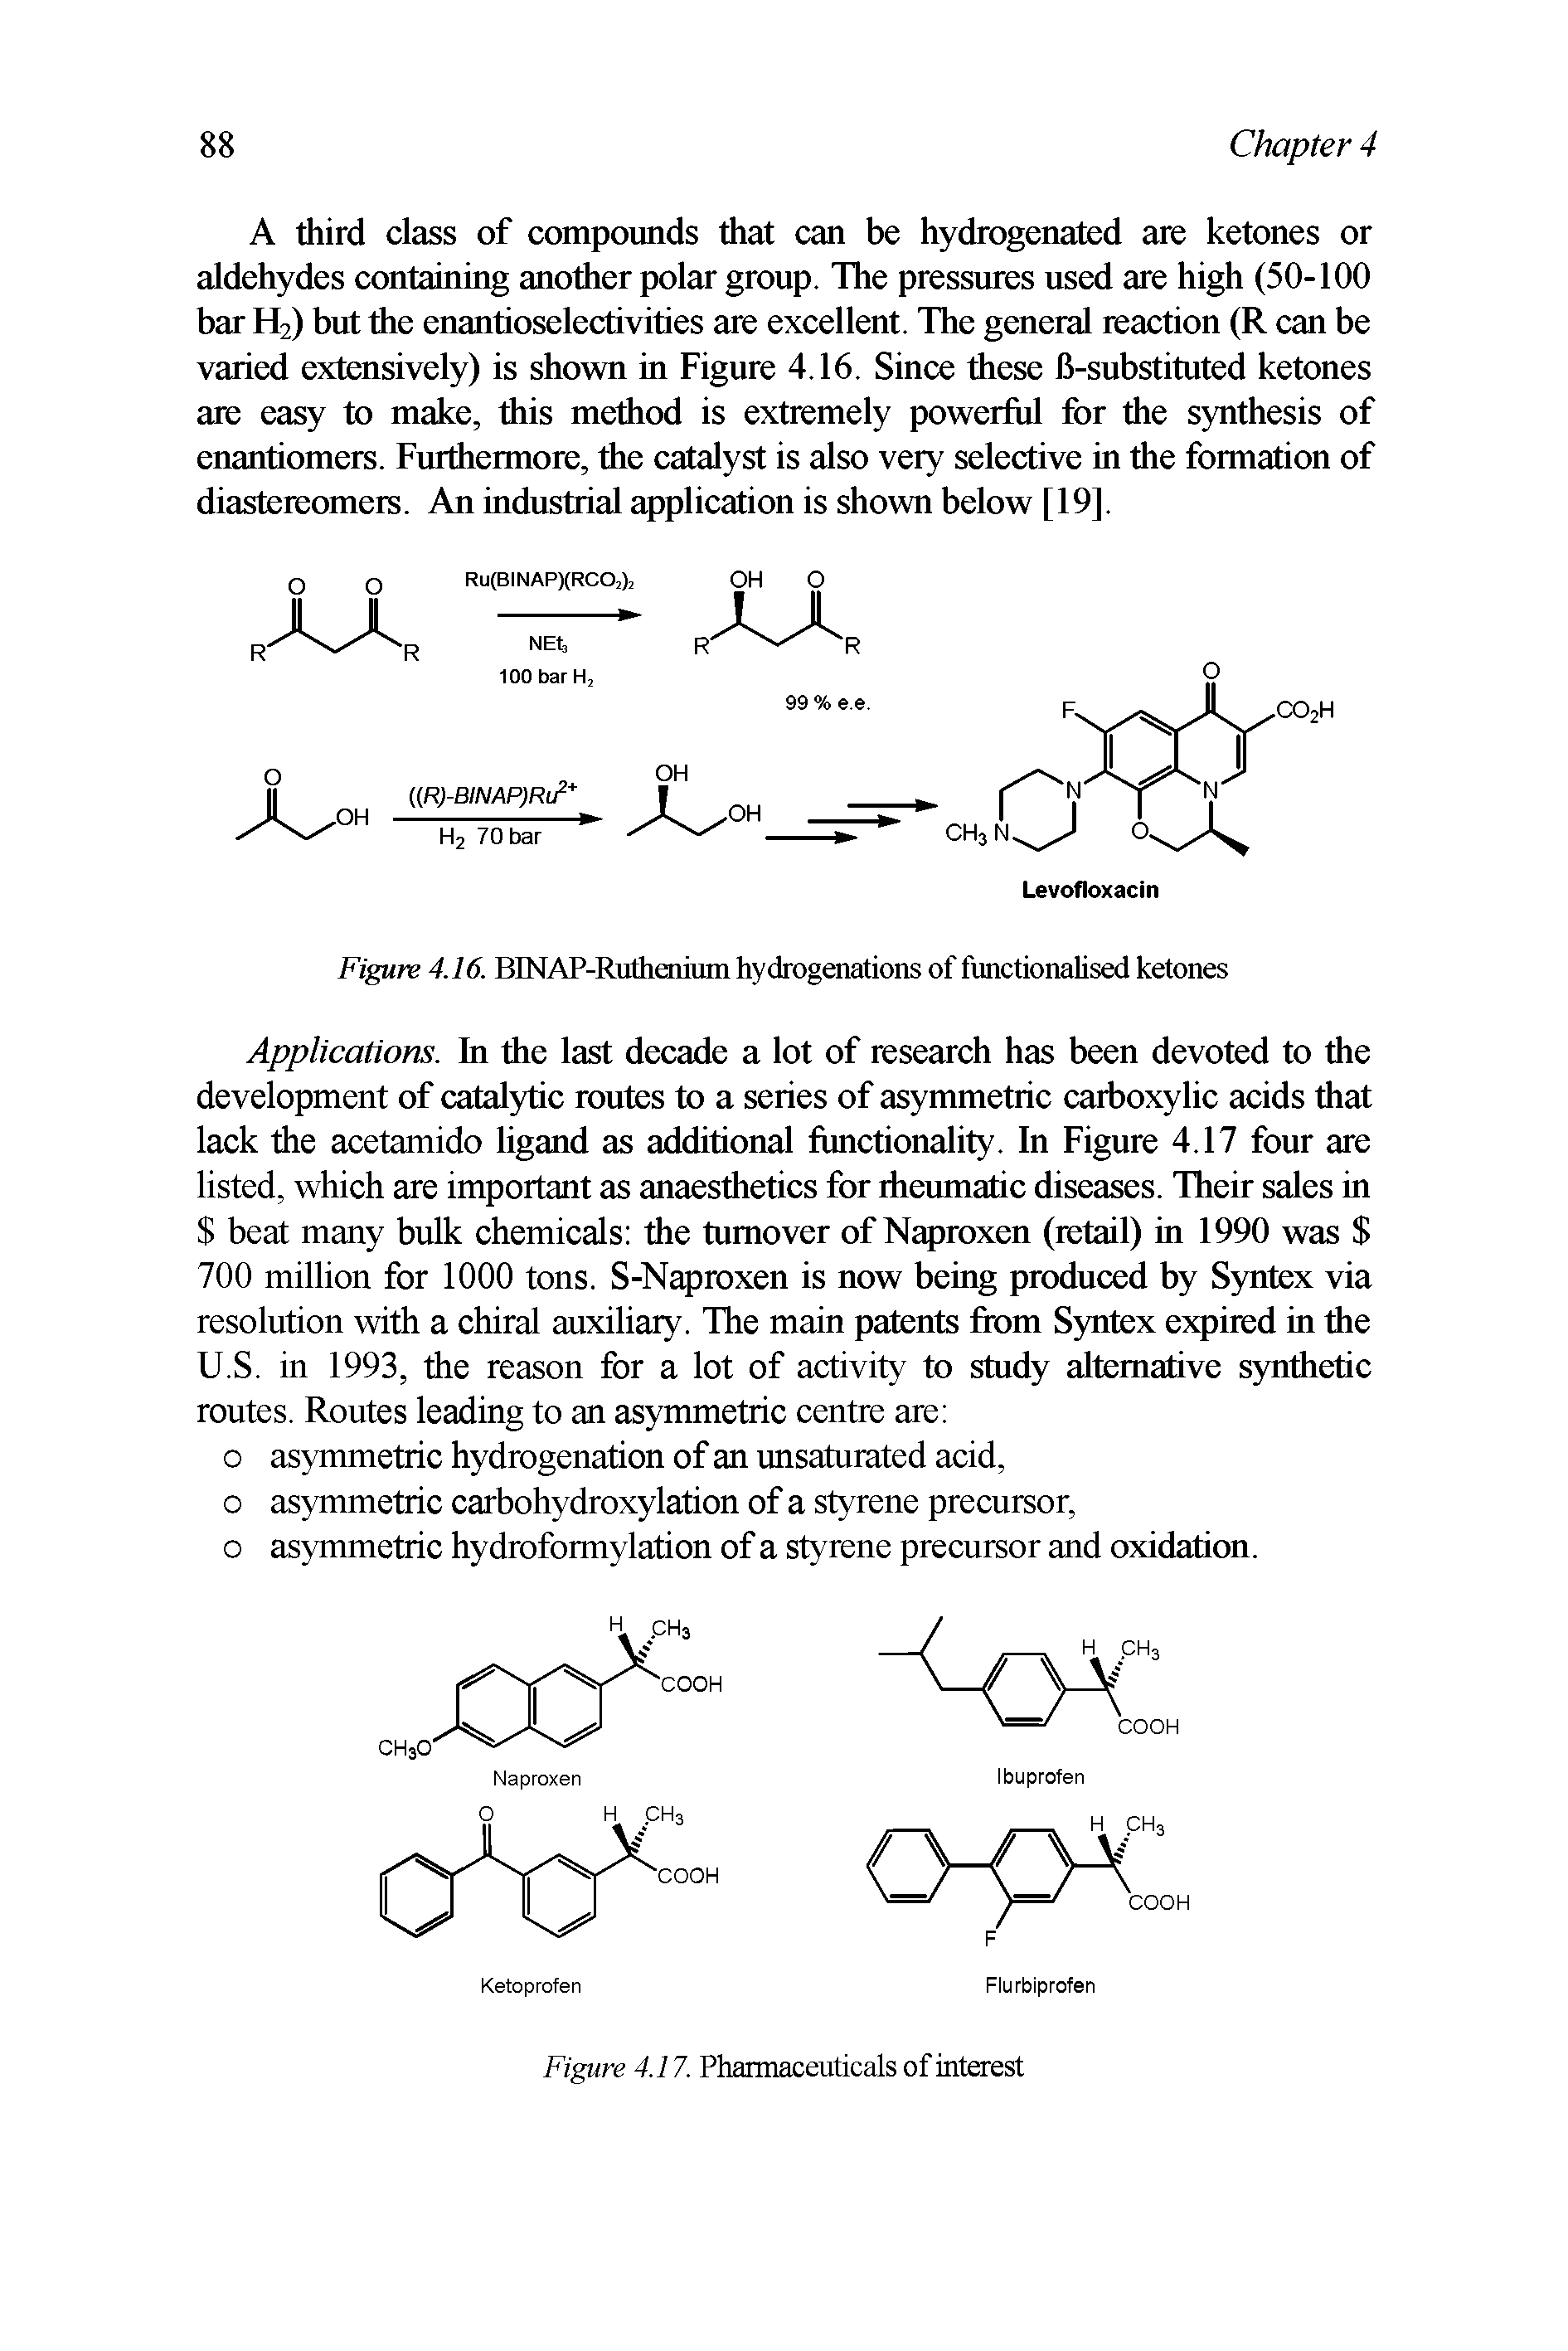 Figure 4.16. BINAP-Ruthenium hydrogenations of functionalised ketones...